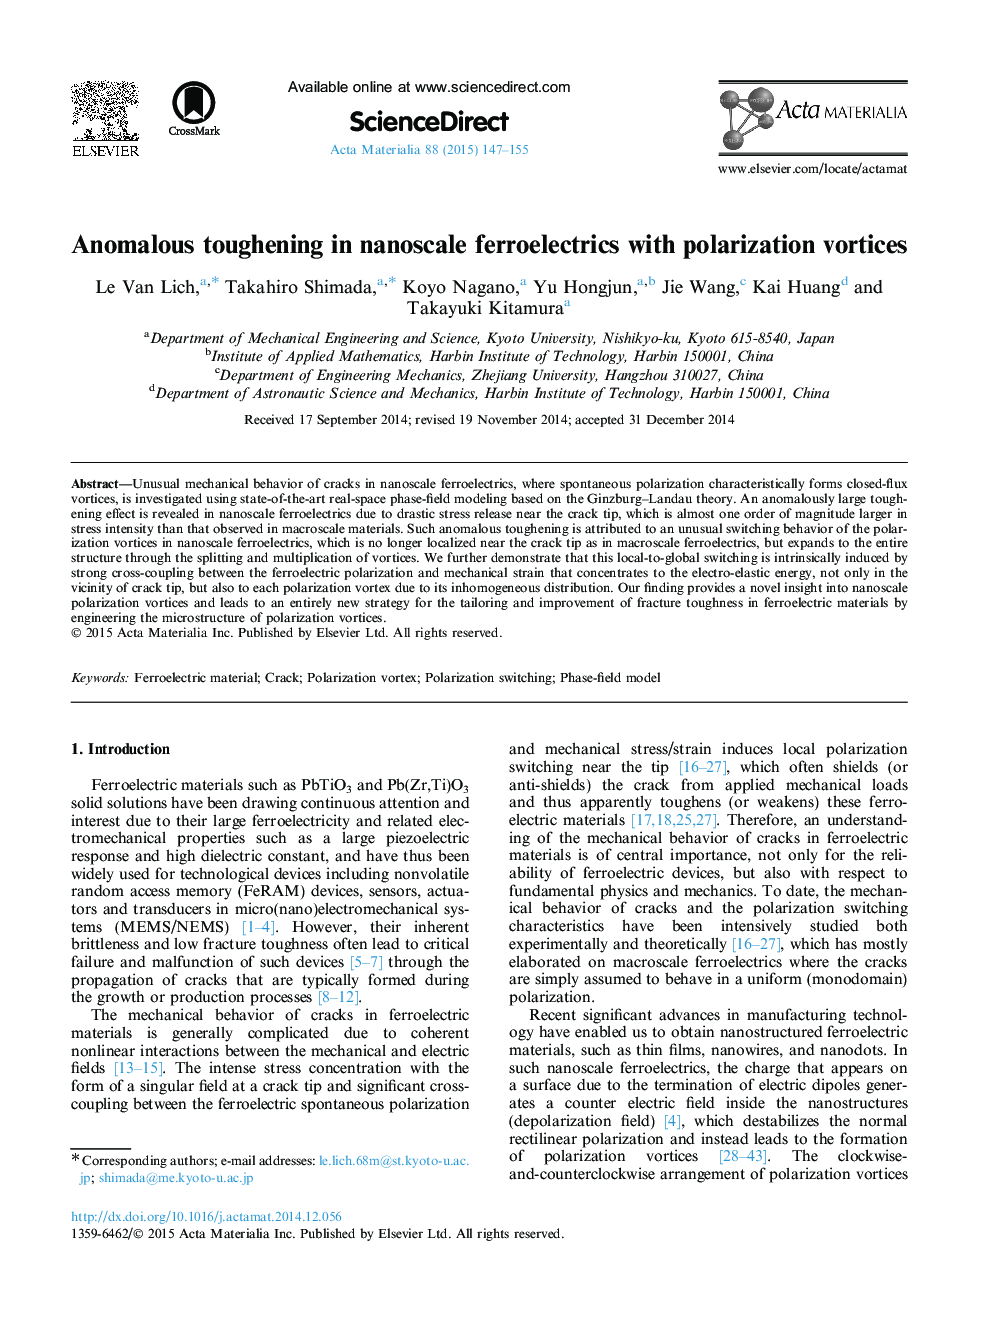 Anomalous toughening in nanoscale ferroelectrics with polarization vortices